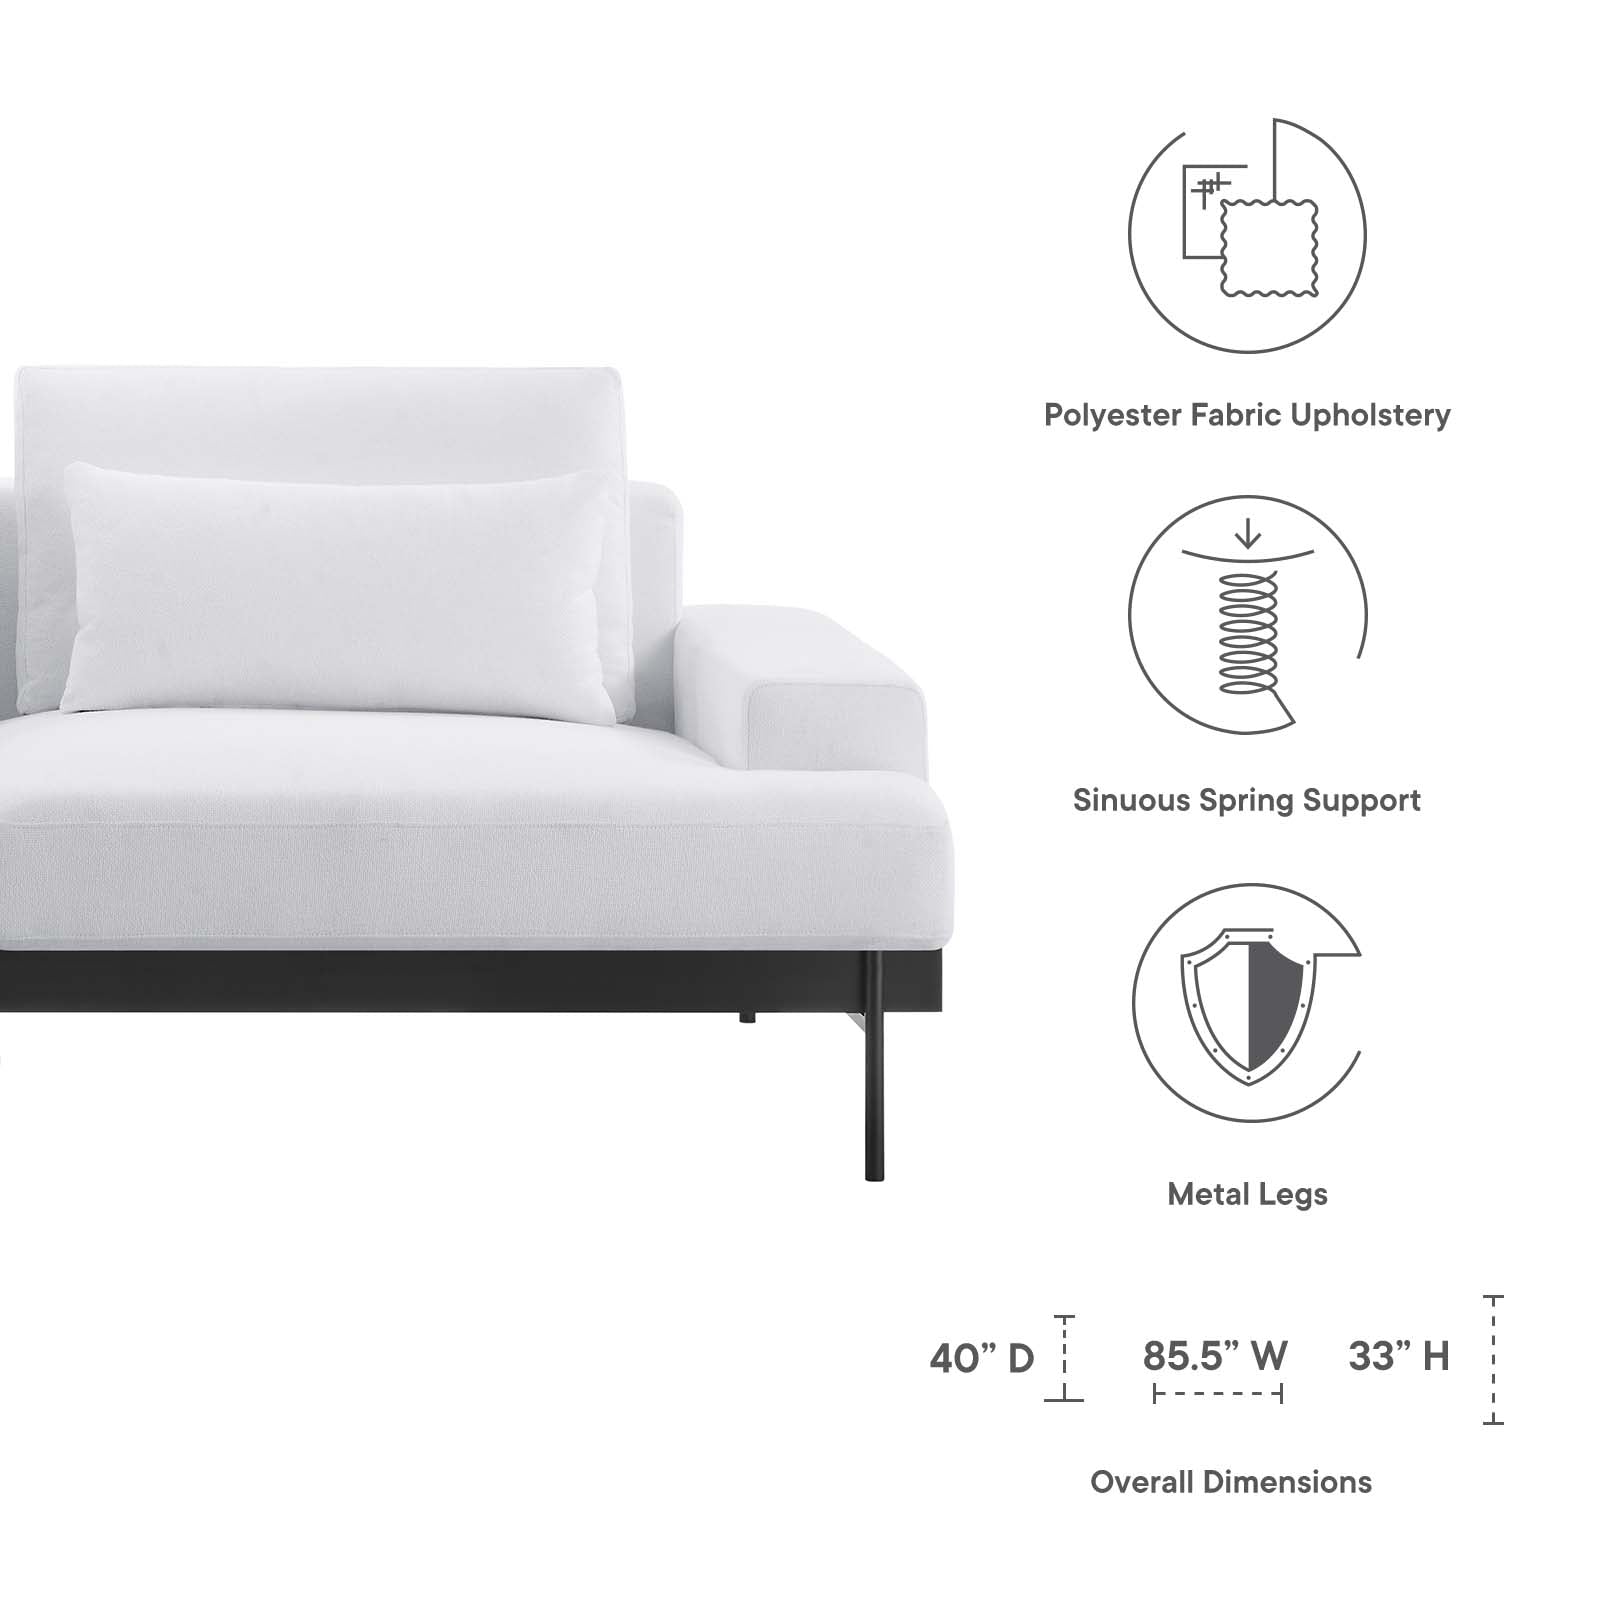 Proximity Upholstered Fabric Sofa - East Shore Modern Home Furnishings